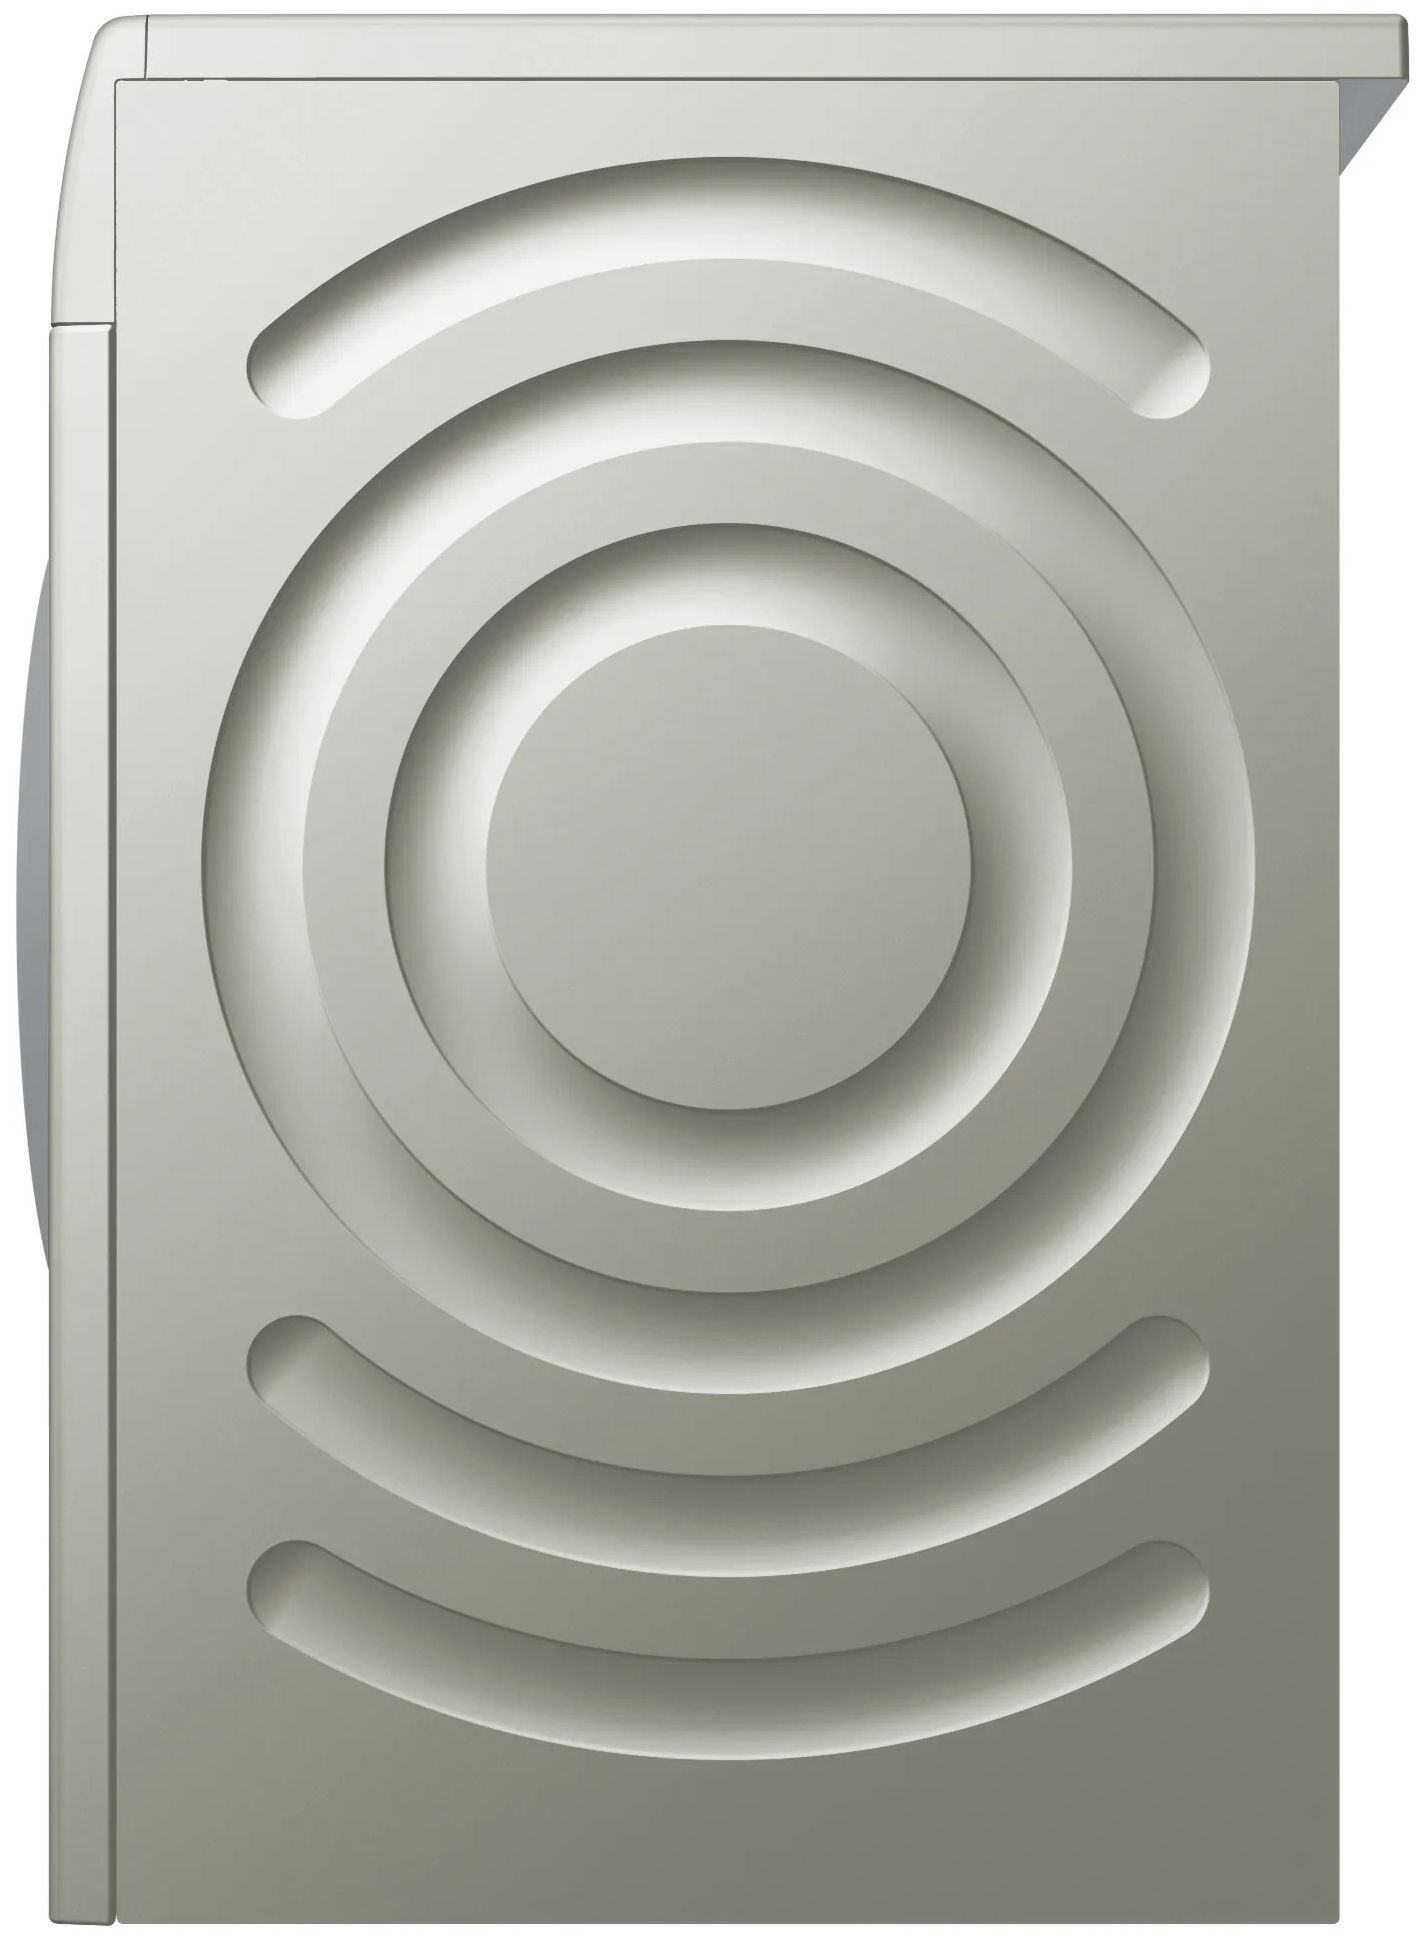 8 WGB2560X0 kg Waschmaschine Boomstore bei 10 Serie A 1600 AutoClean Bosch Frontlader aquaStop U/min EEK: